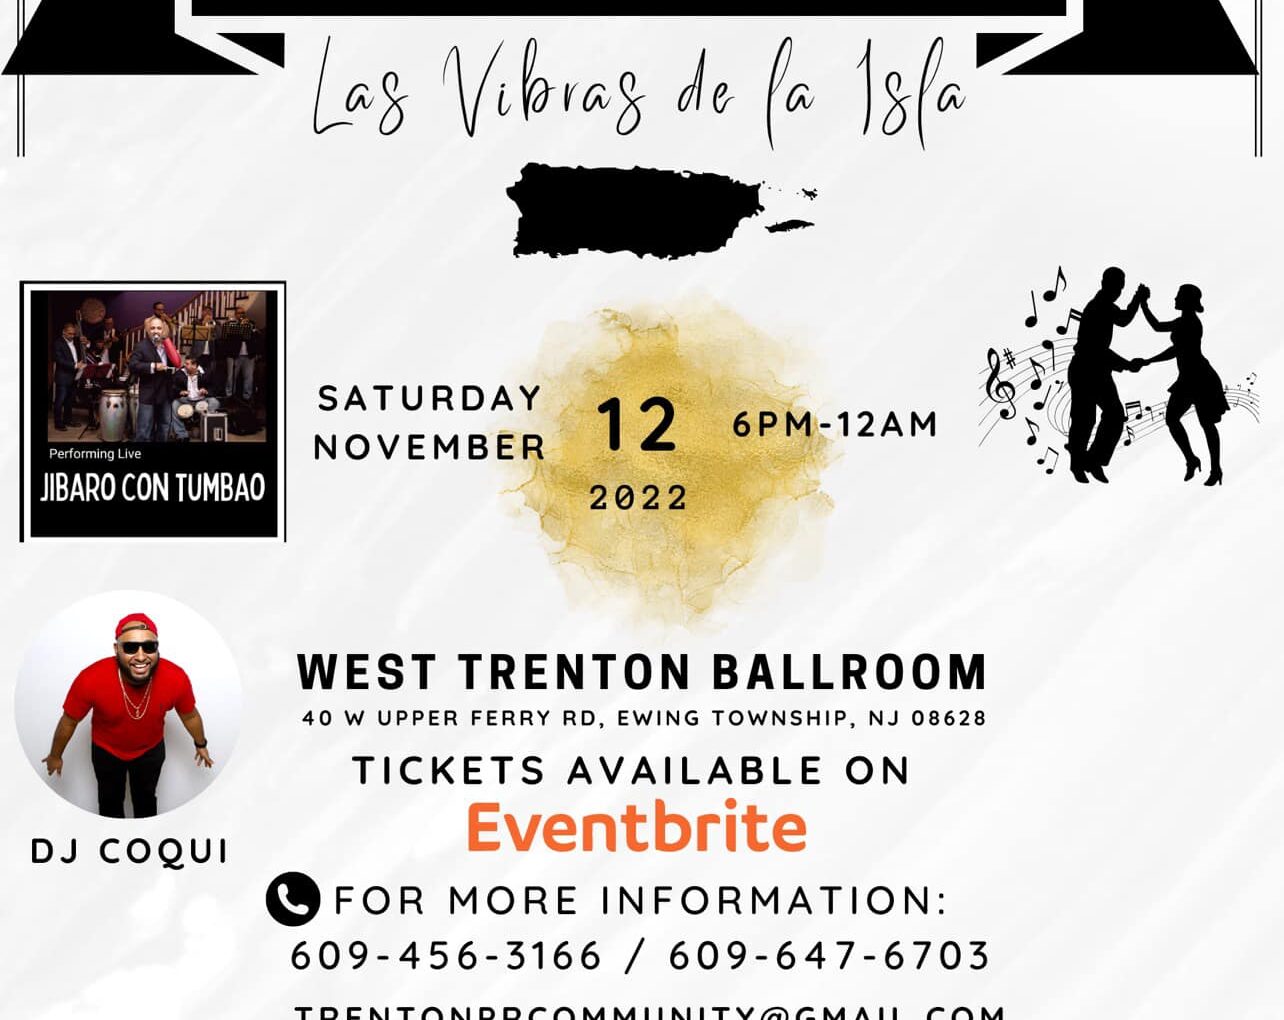 Trenton Puerto Rican Community and Friends Organization Announces Las Vibras de la Isla Cabaret Fundraiser